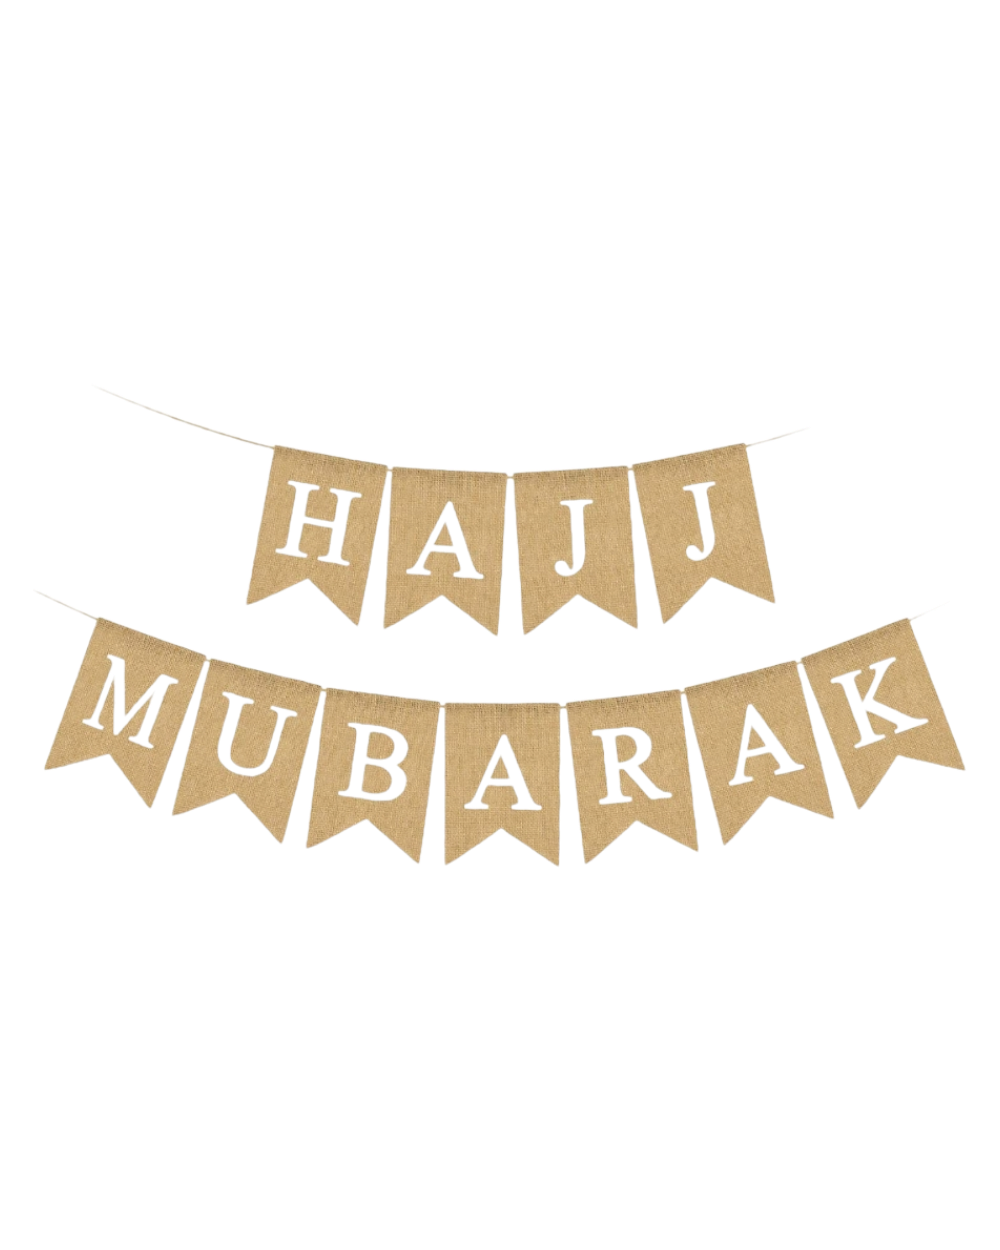 Banderole Hajj Mubarak - Toile de jute